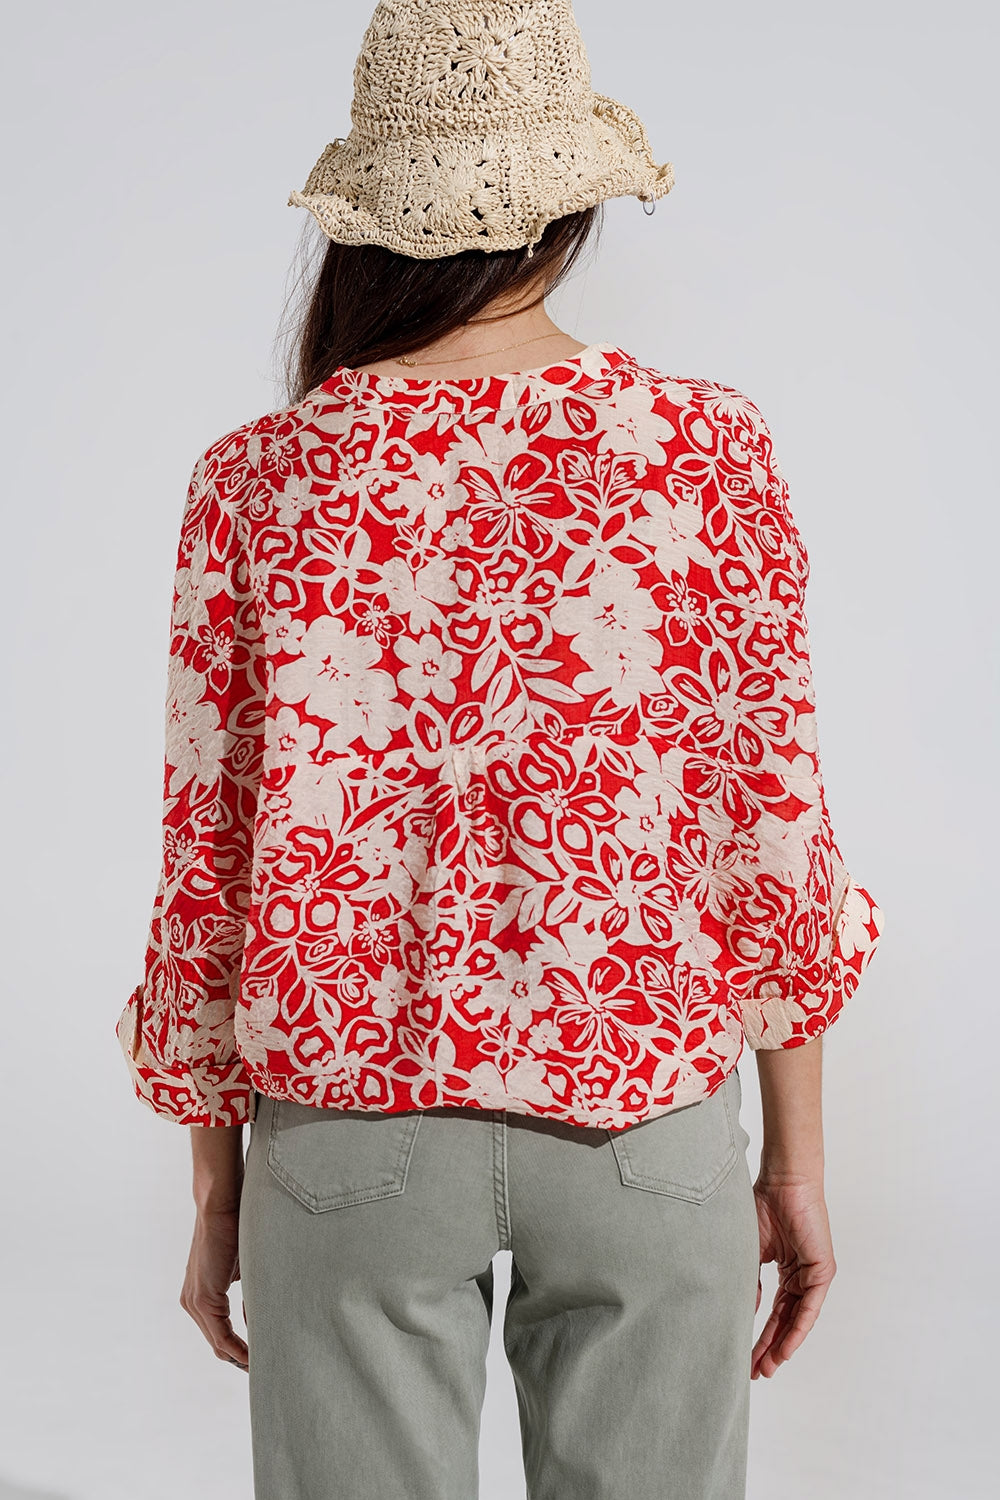 Ontspannen rode blouse met bloemenprint en klokmouwen